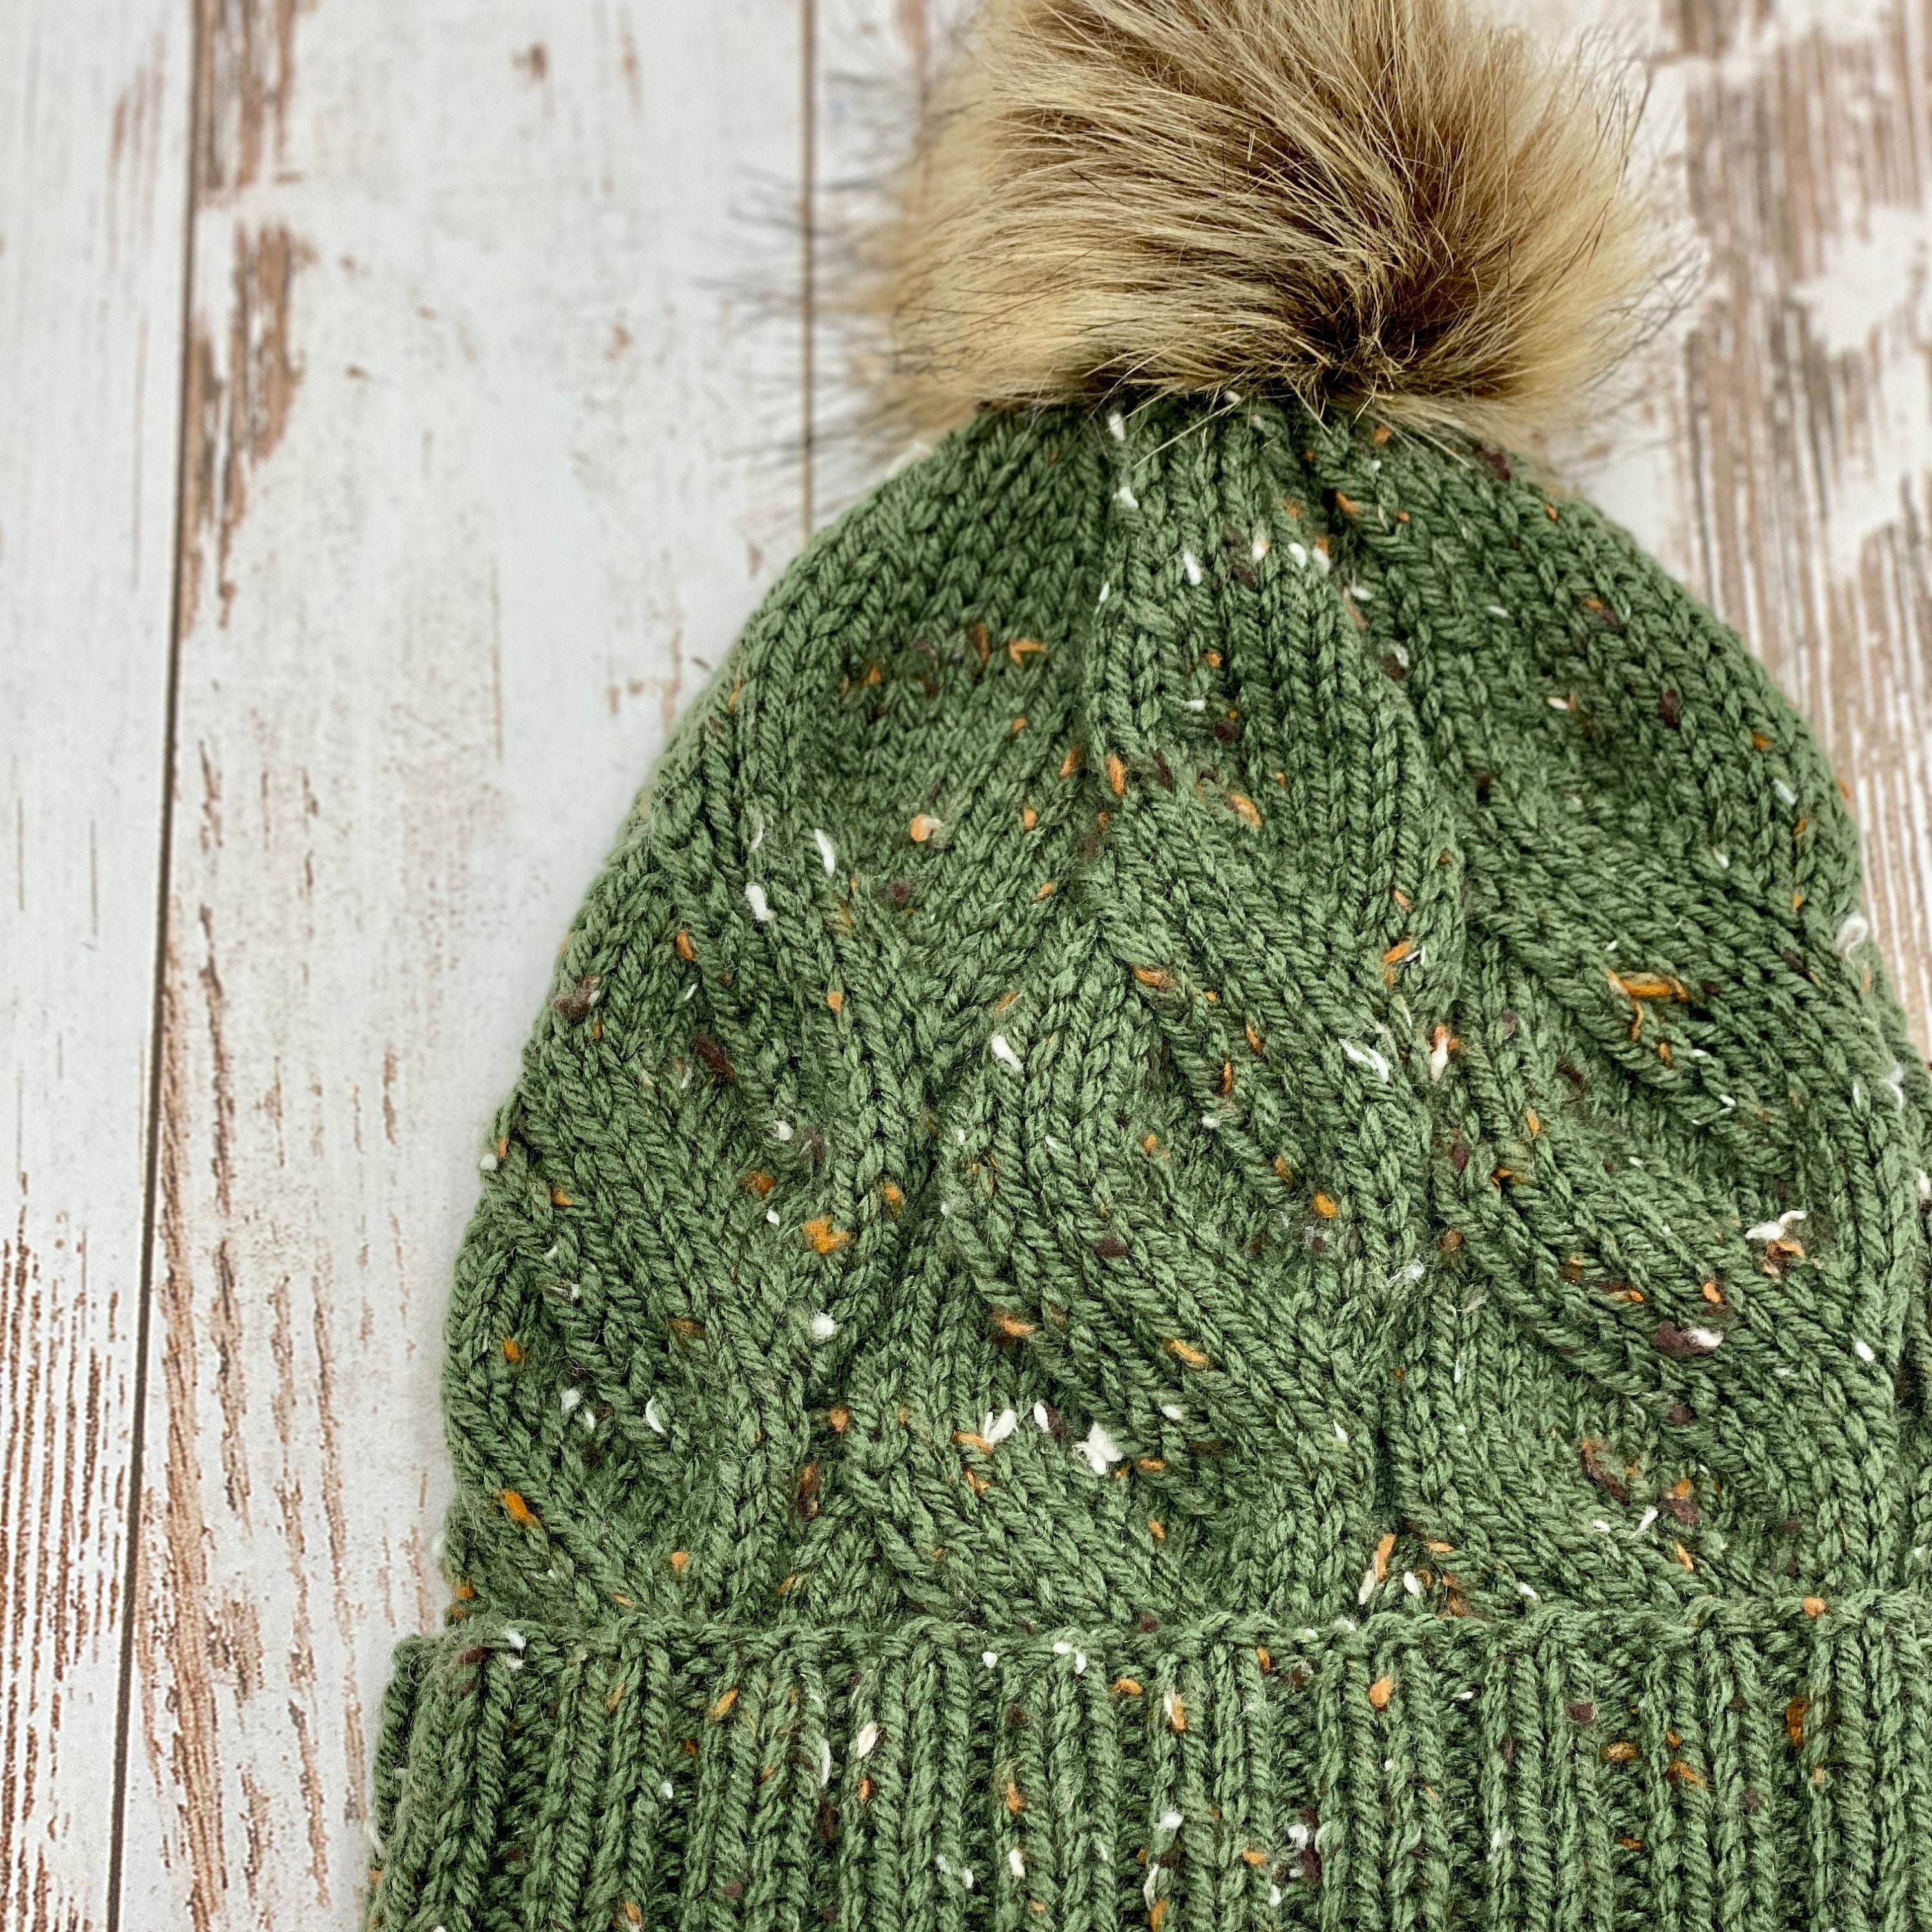 Knit Green Tweed Cable Beanie Fur Pom Pom Beanie Hat Winter 